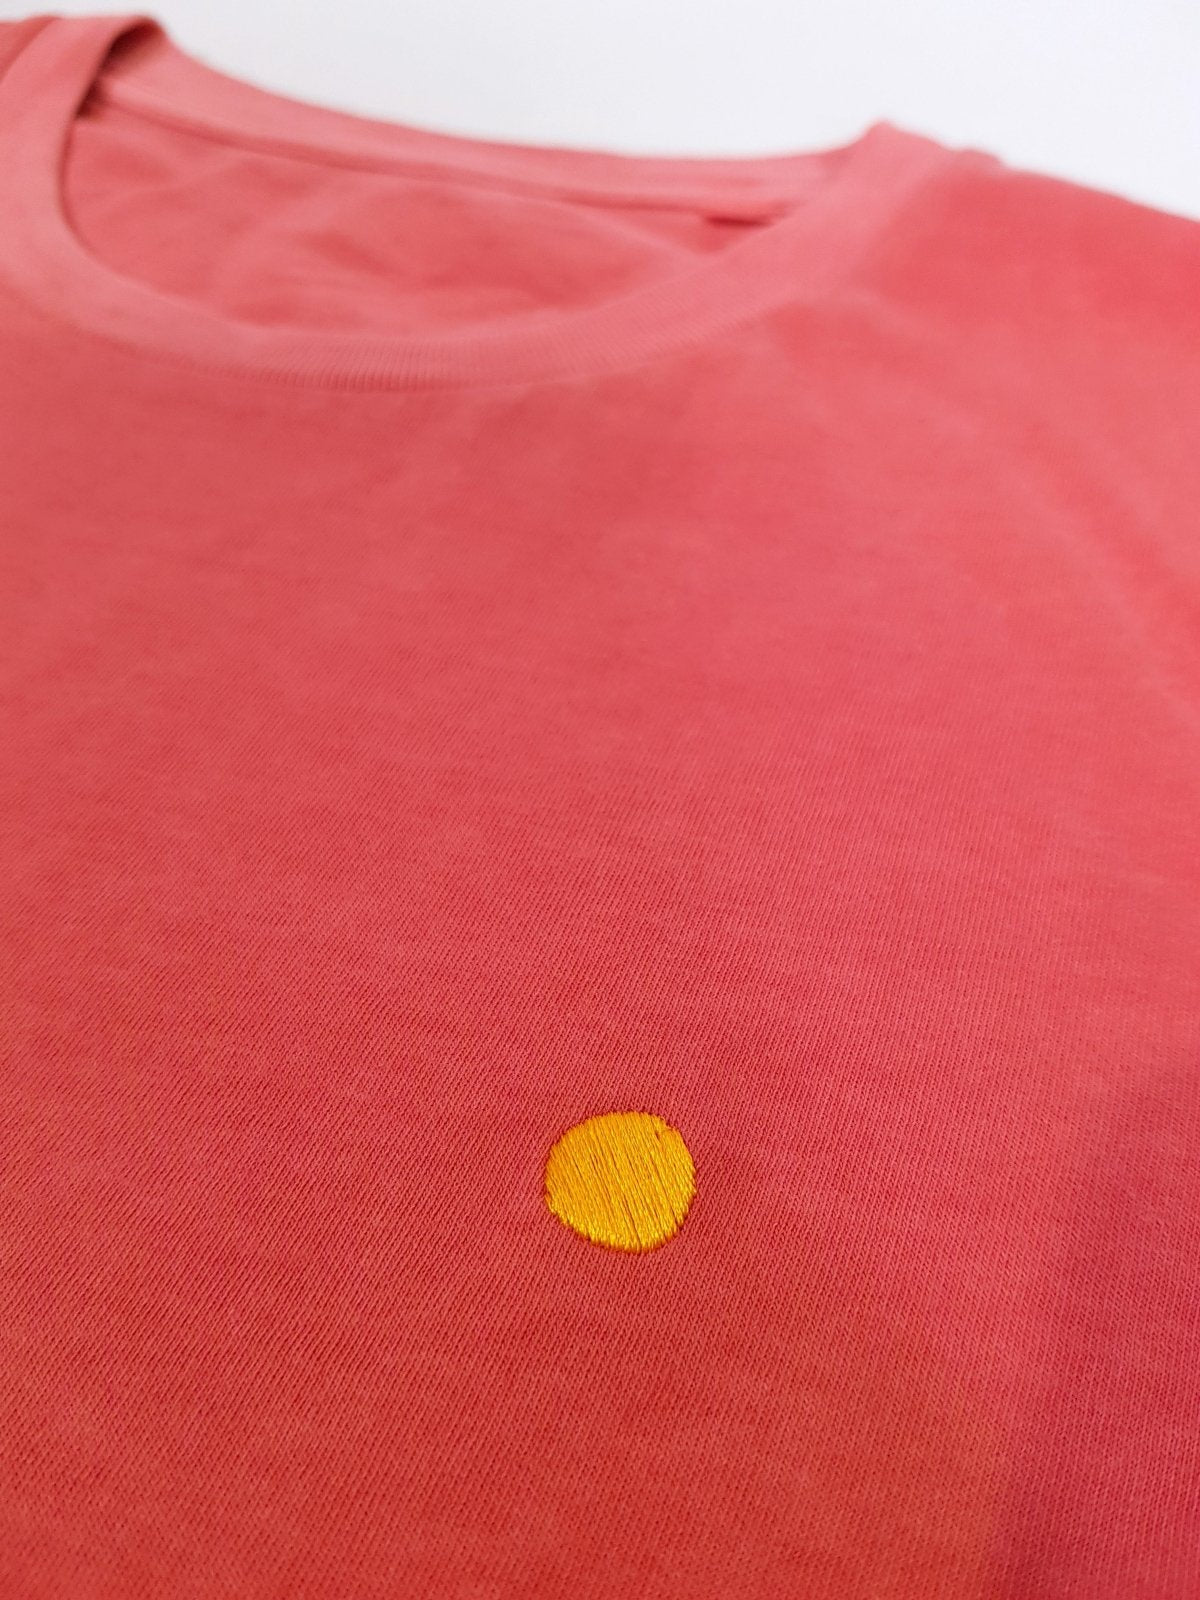 yellow dot G. Dyed Carmine Red Unisex Tees te koop in de webshop van Almost Summer Amsterdam